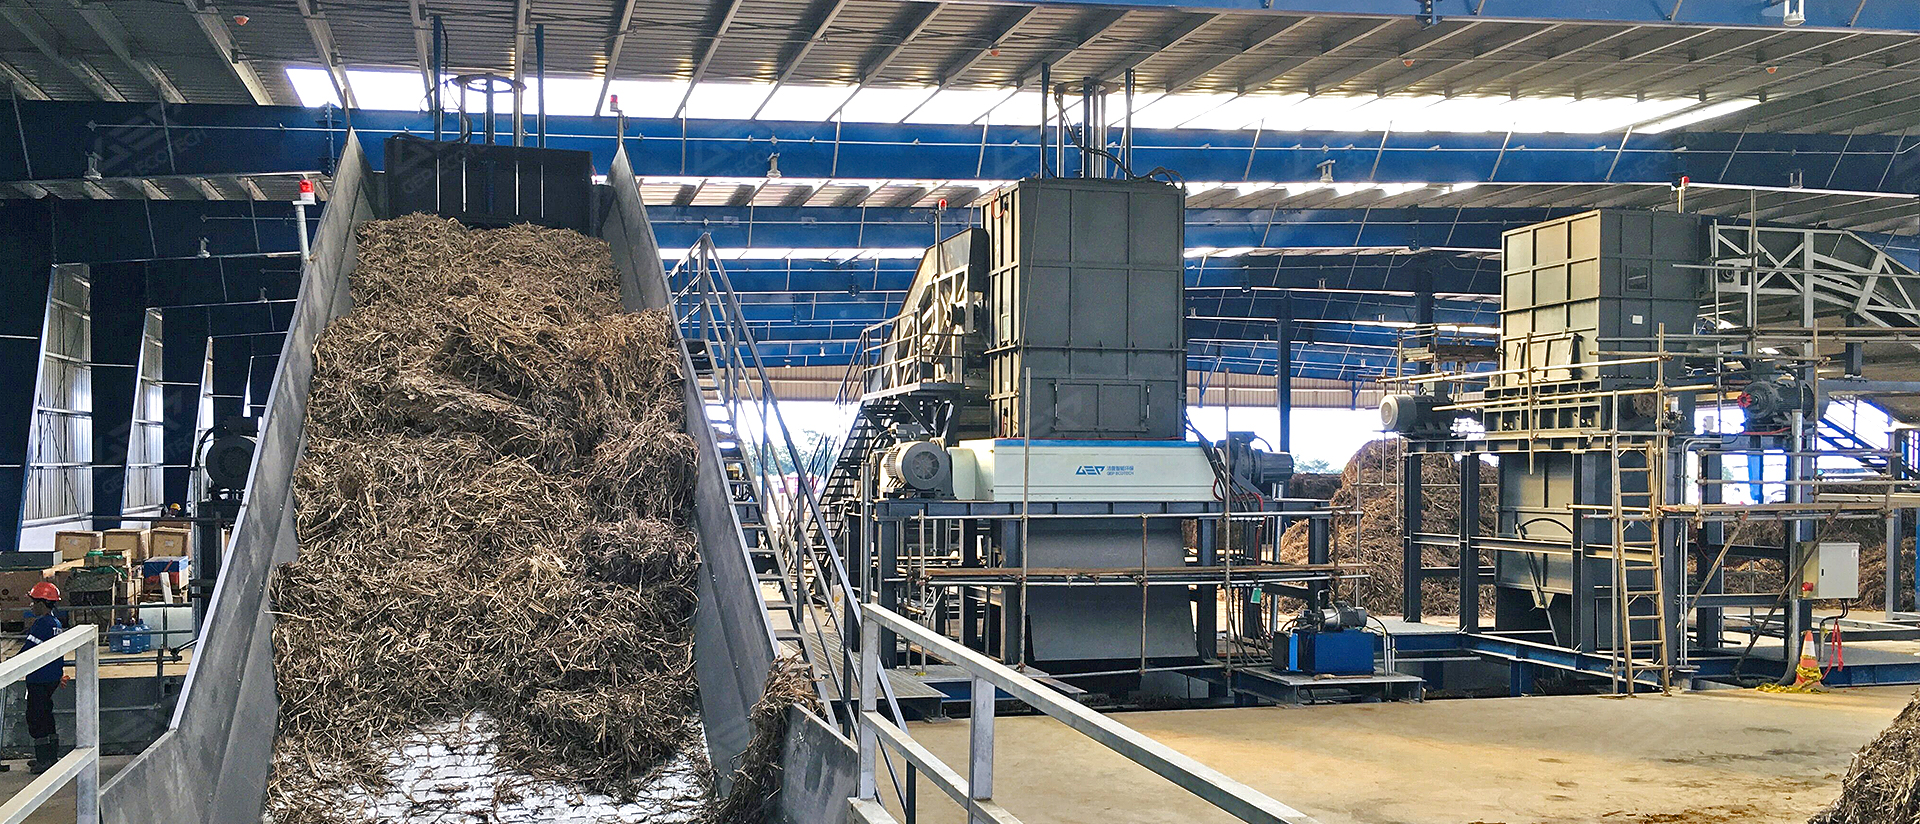 Biomass Waste Processing